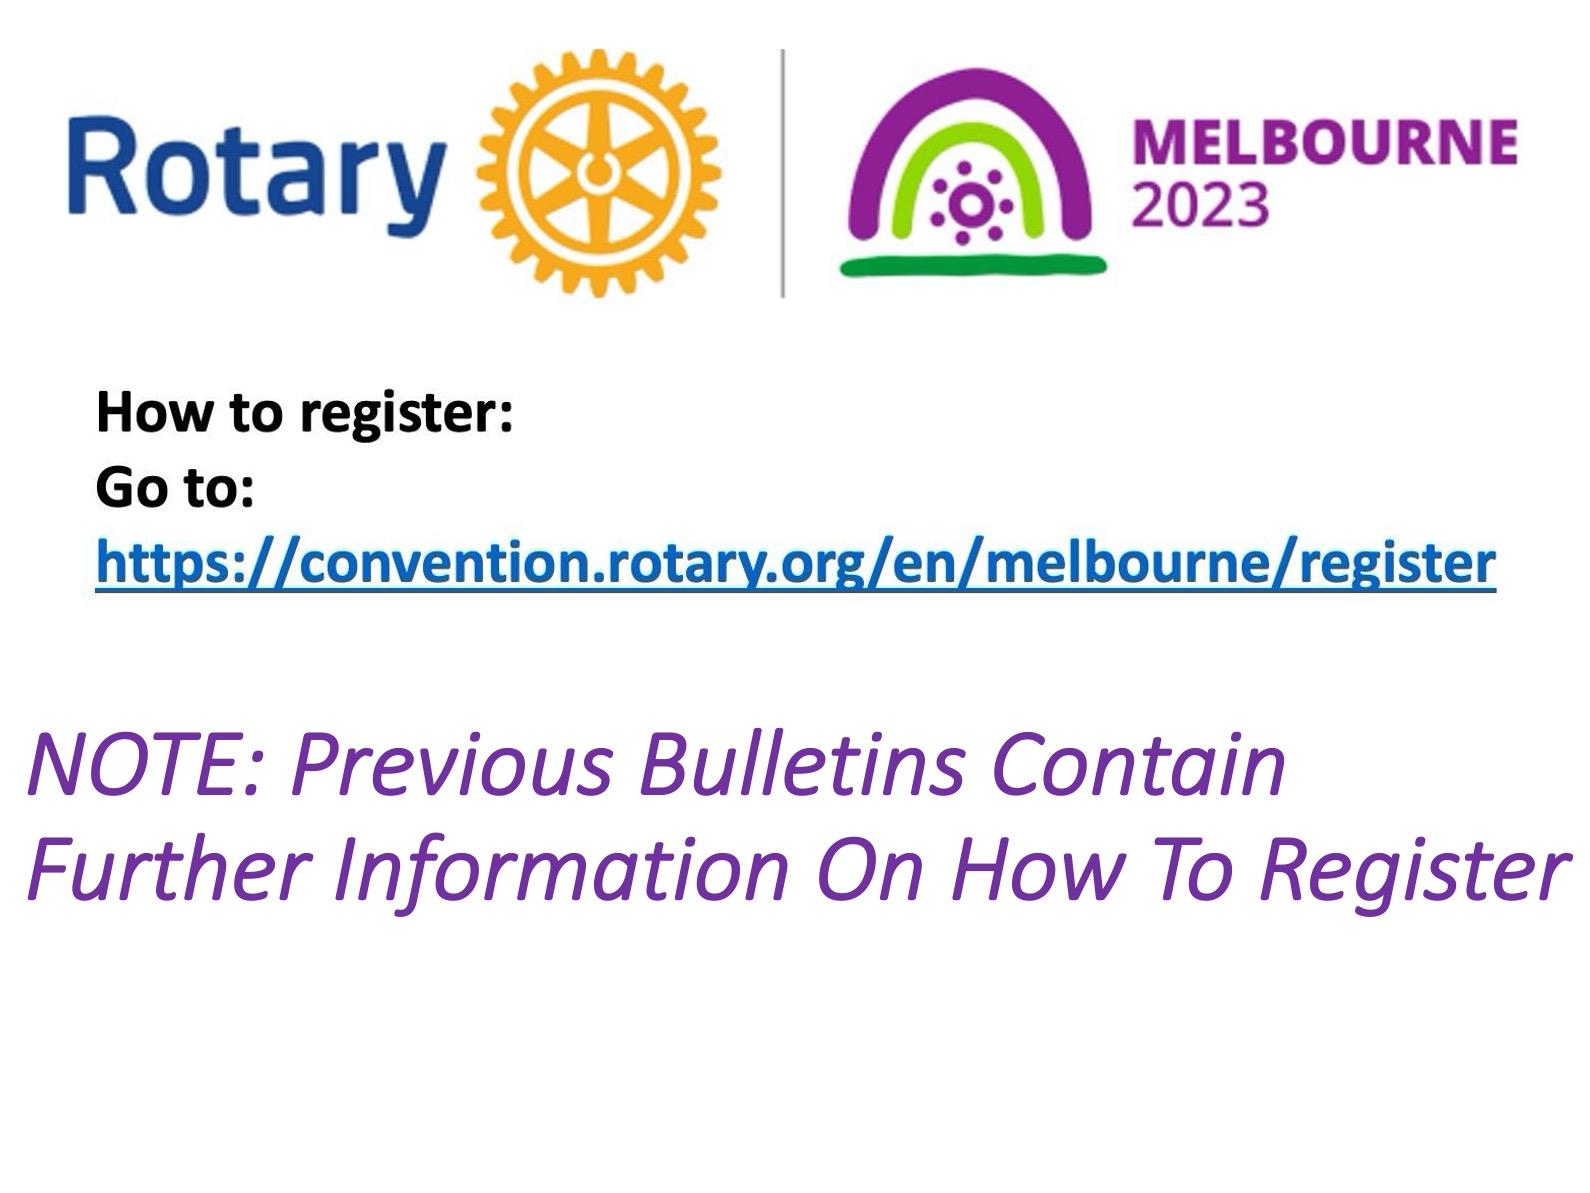 2023 MELBOURNE ROTARY INTERNATIONAL CONVENTION REGISTRATION STILL